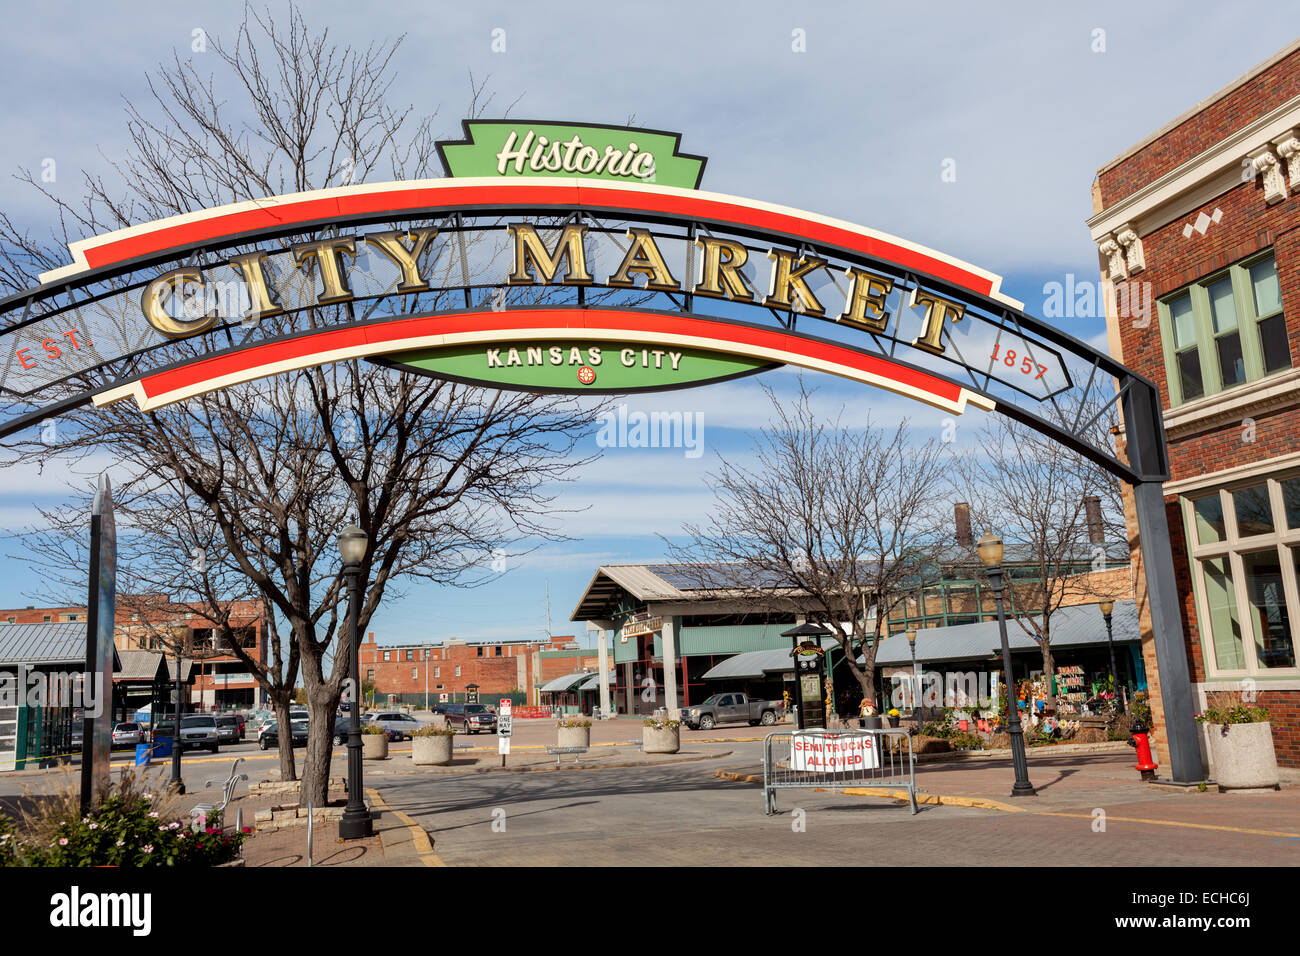 Historic City Market, Kansas City, Missouri, USA Stock Photo